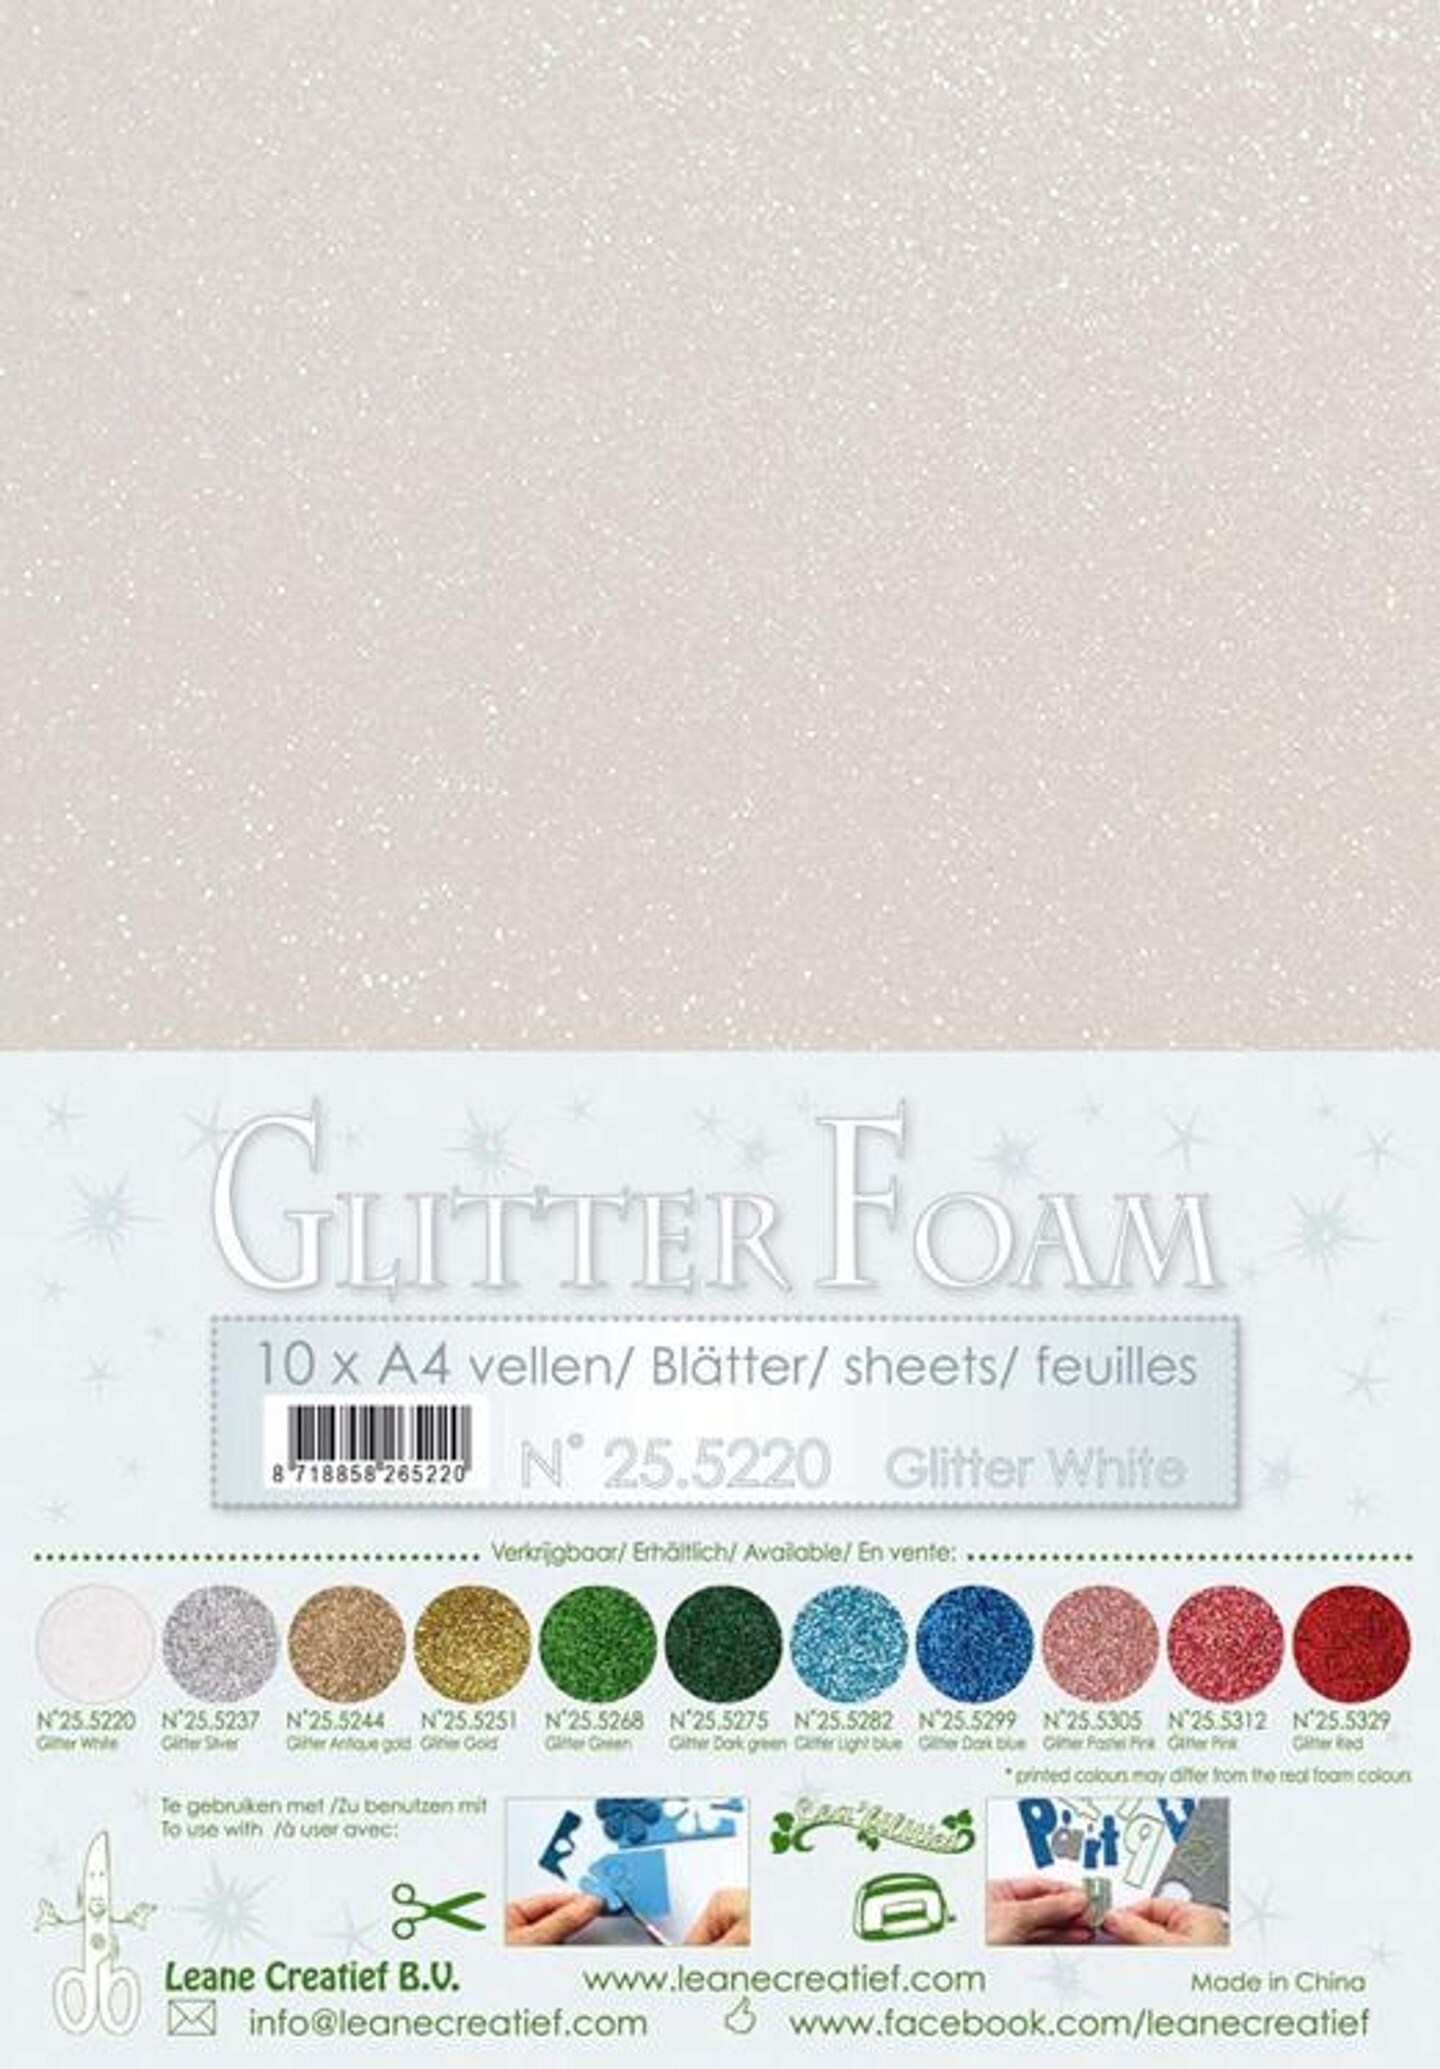 12 Packs: 150 ct. (1,800 total) Glitter Star Foam Stickers by